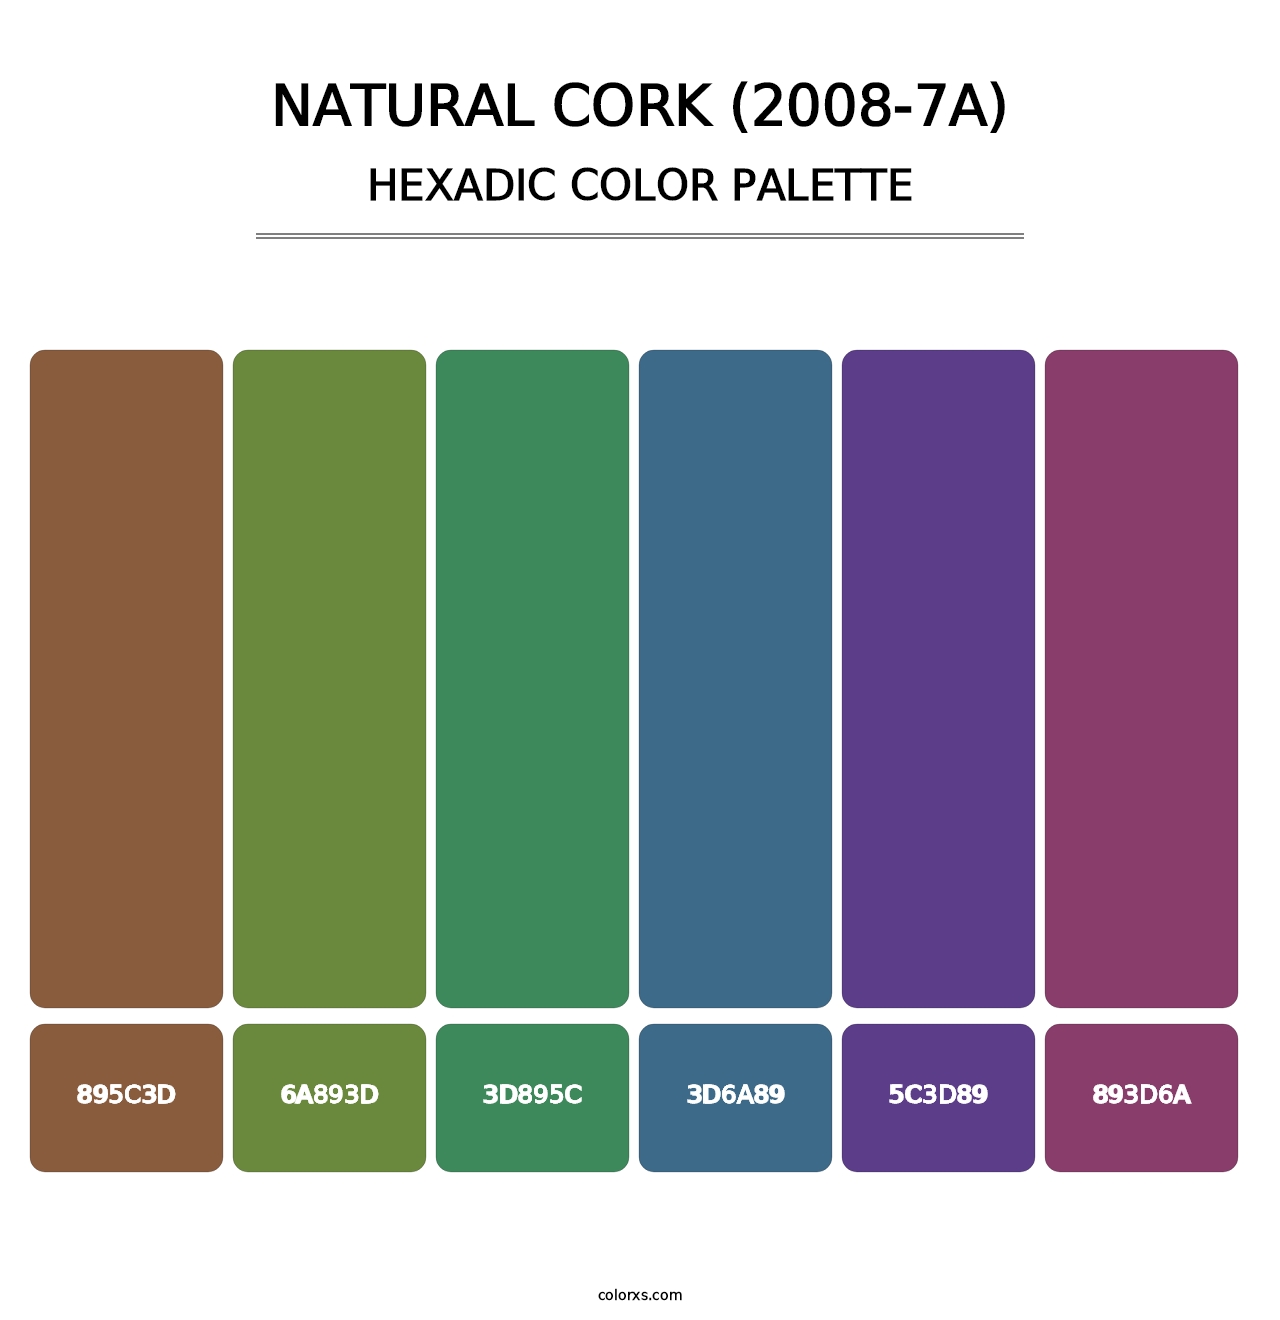 Natural Cork (2008-7A) - Hexadic Color Palette